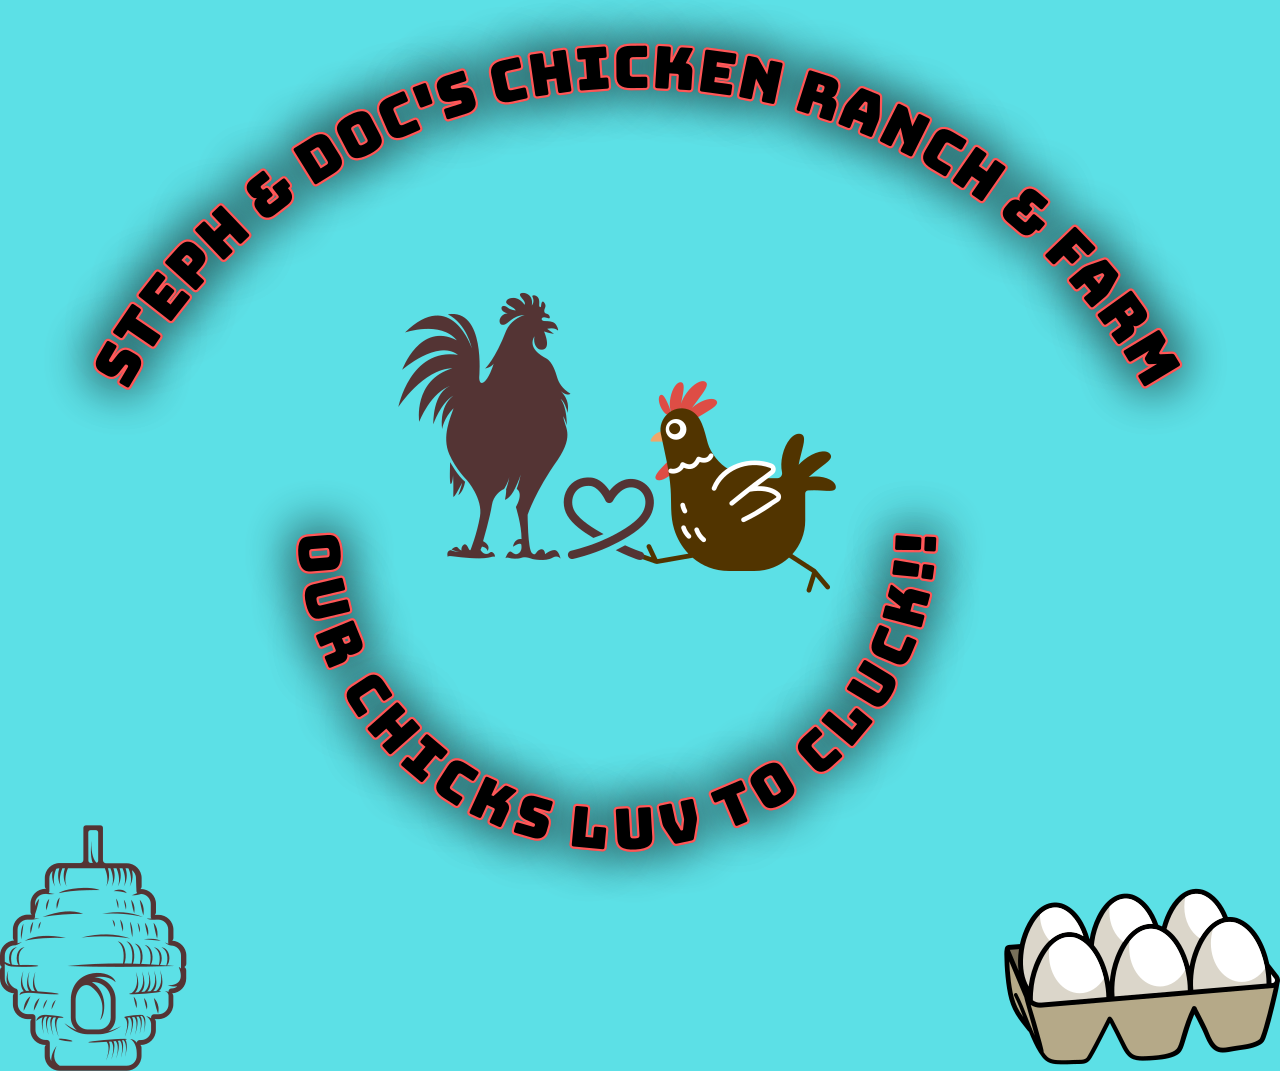 Steph & Doc's Chicken Ranch & Farm's logo